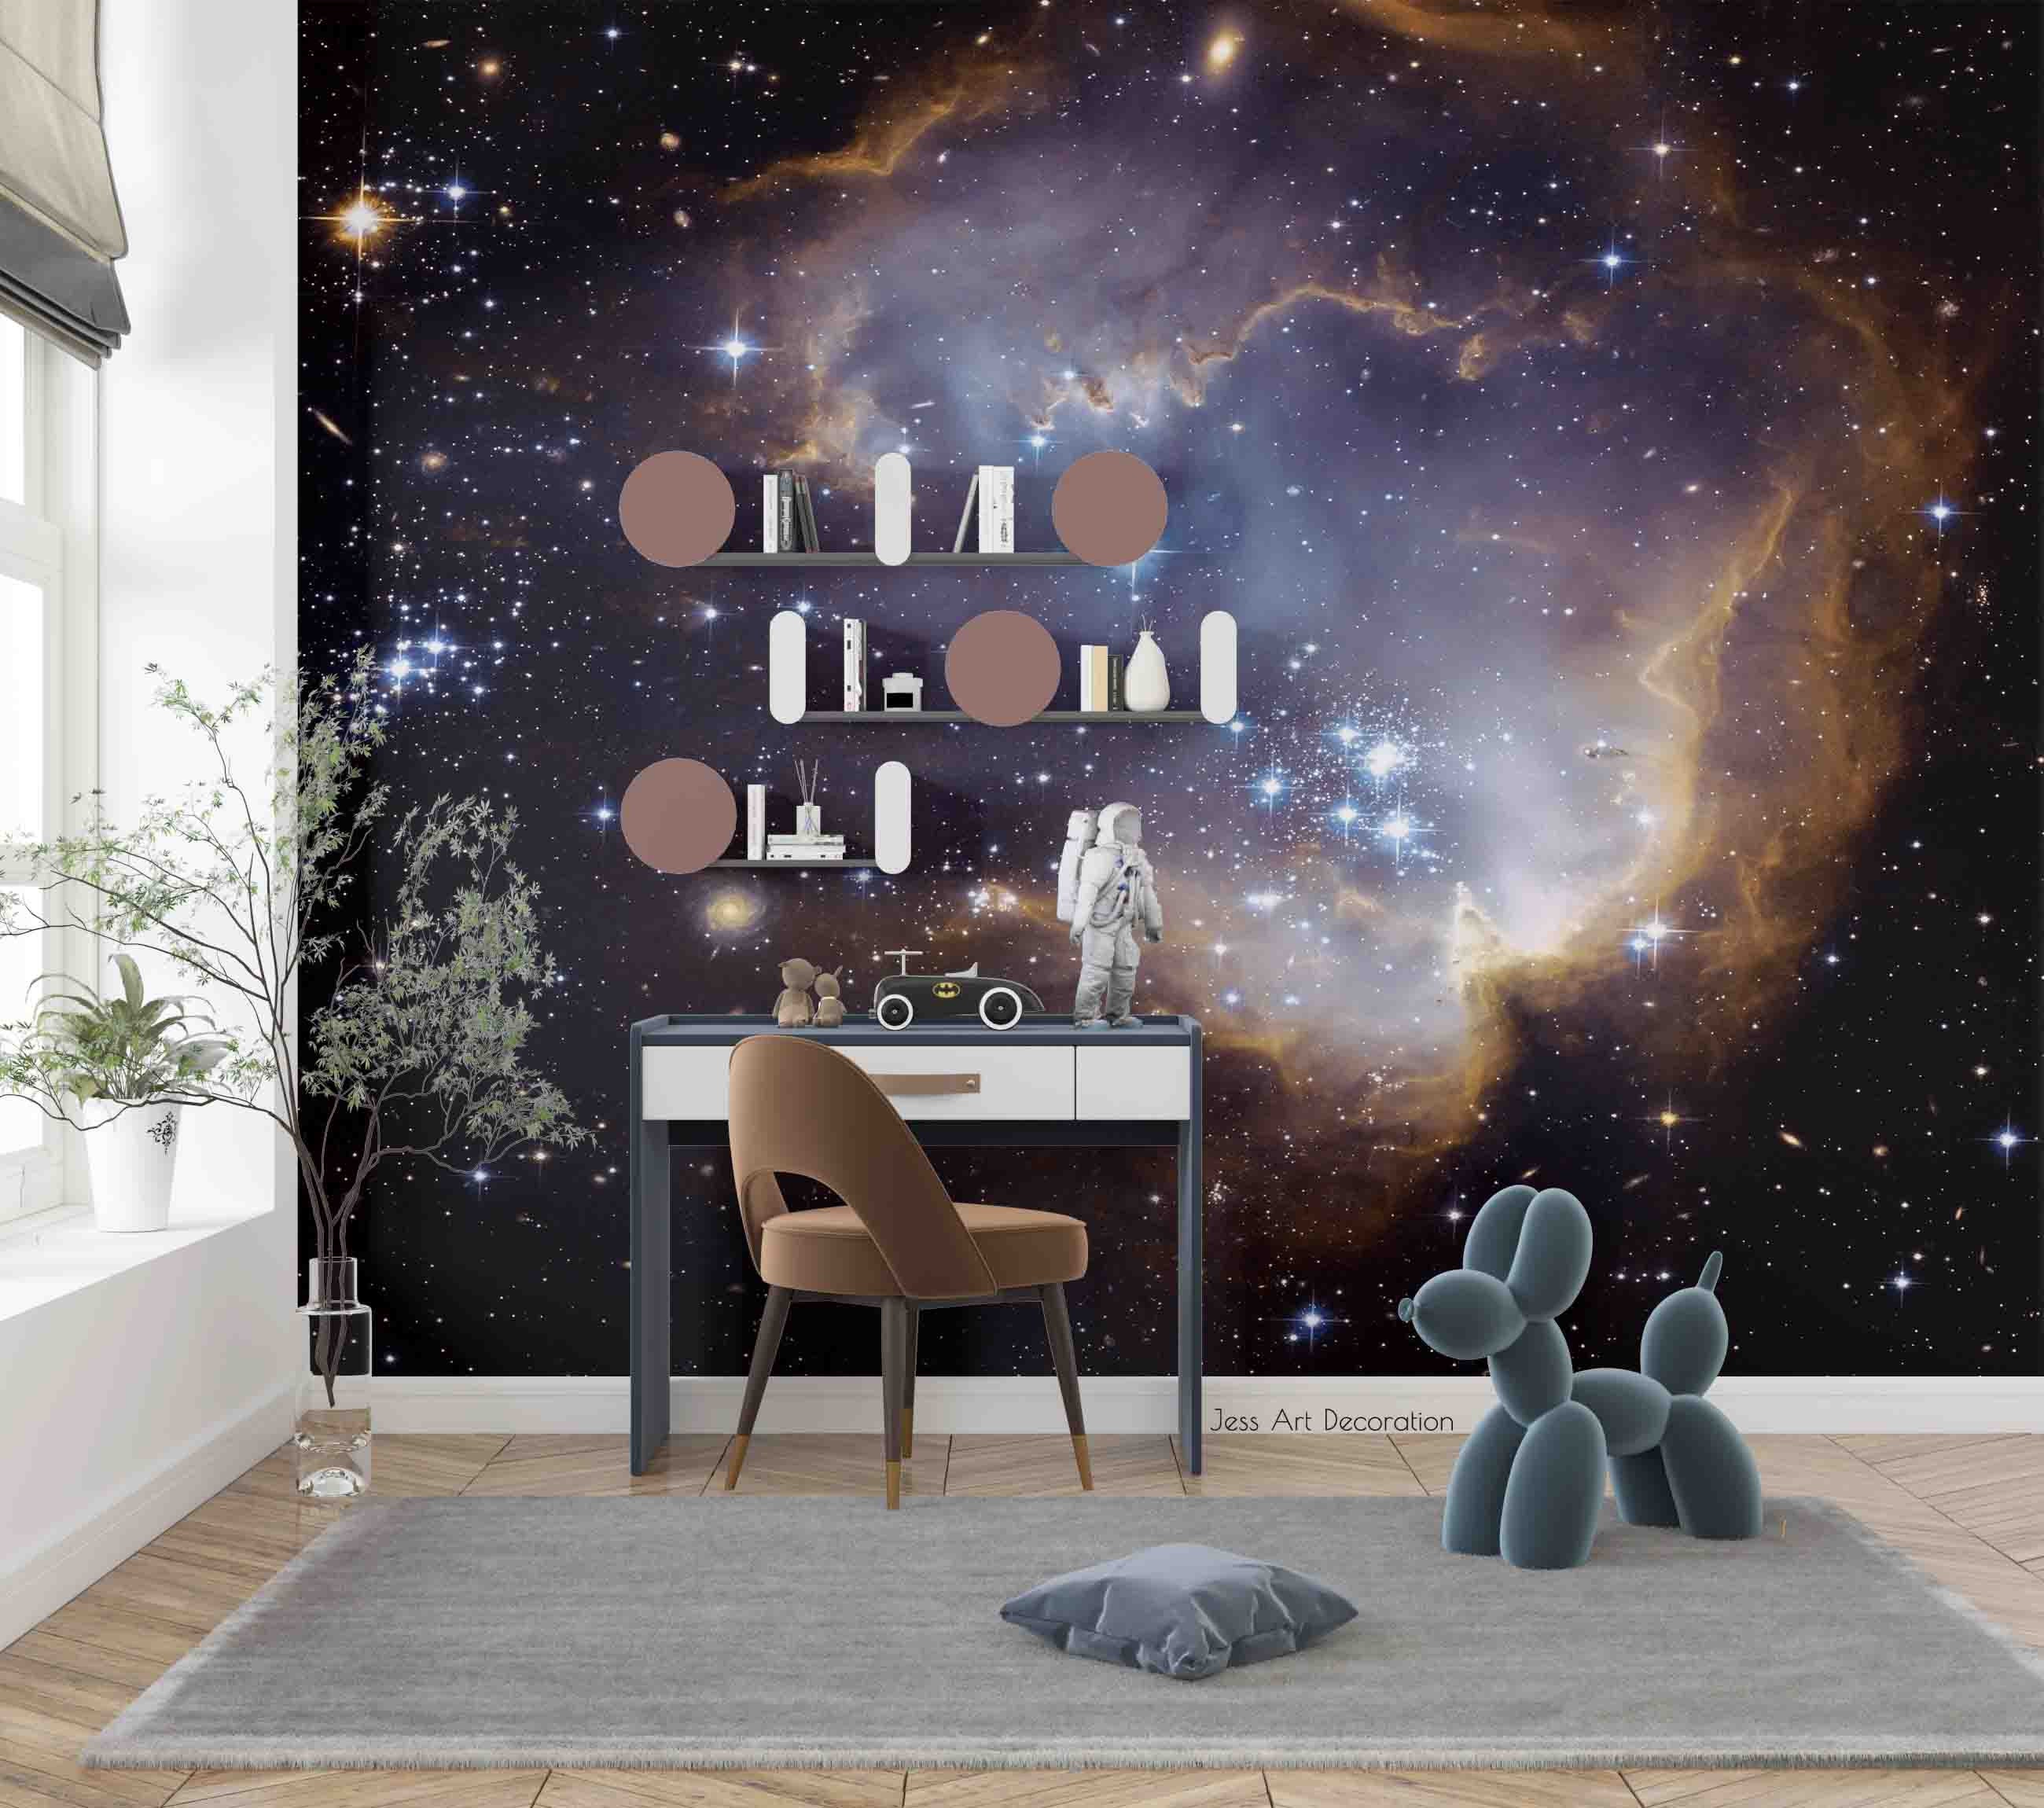 3D Self-adhesive Wallpaper Painting Star Field in Space a Nebulae Bedroom Murals 